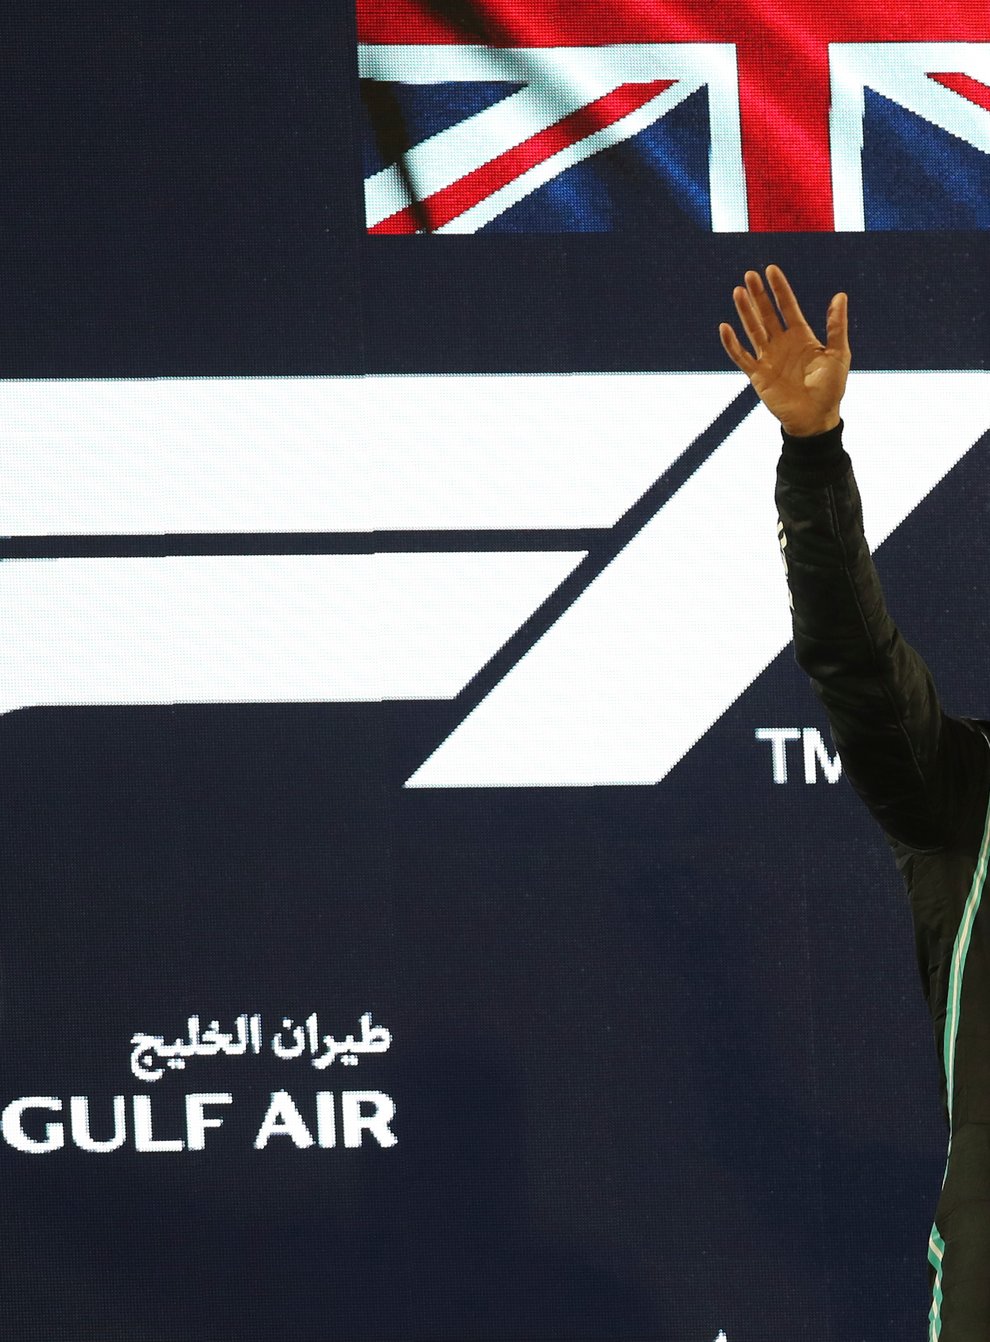 Lewis Hamilton celebrates winning in Bahrain